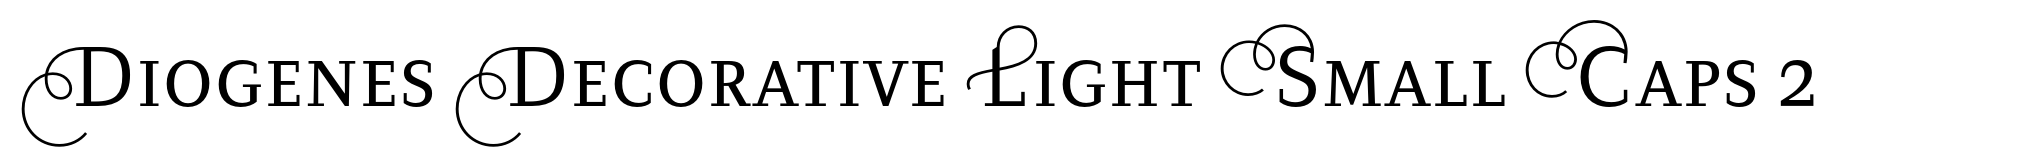 Diogenes Decorative Light Small Caps 2 image